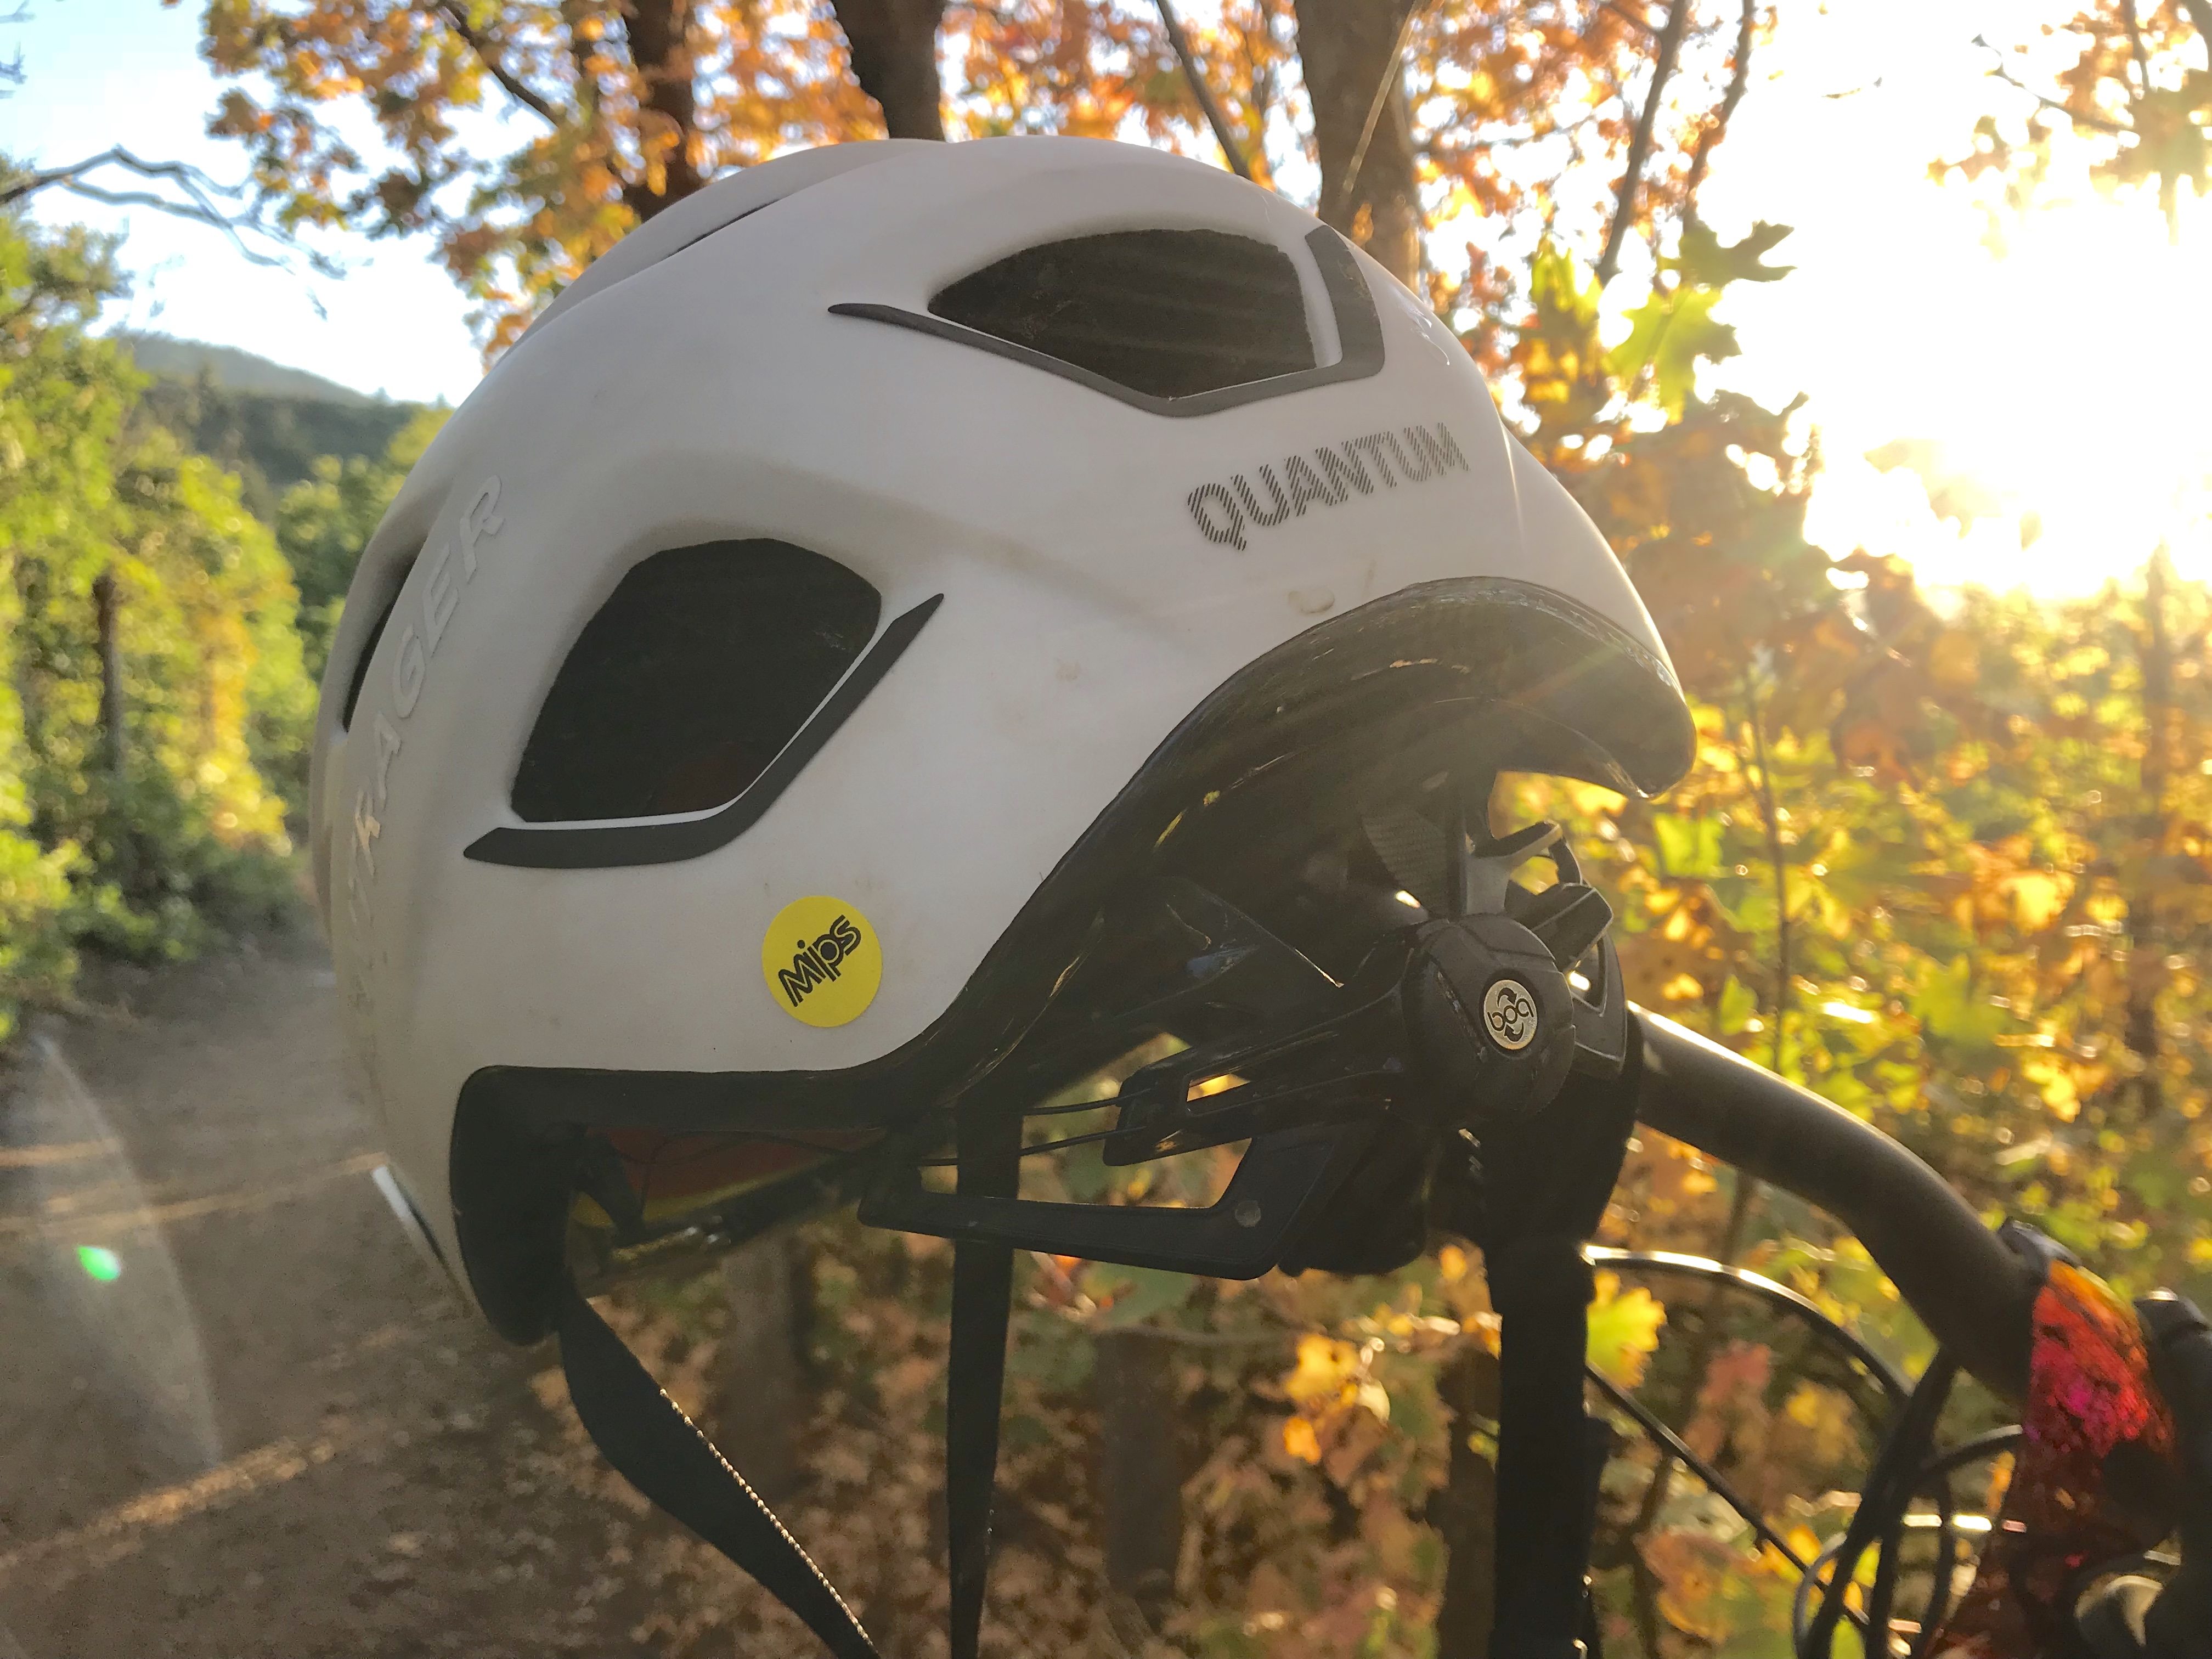 quantum mips bike helmet